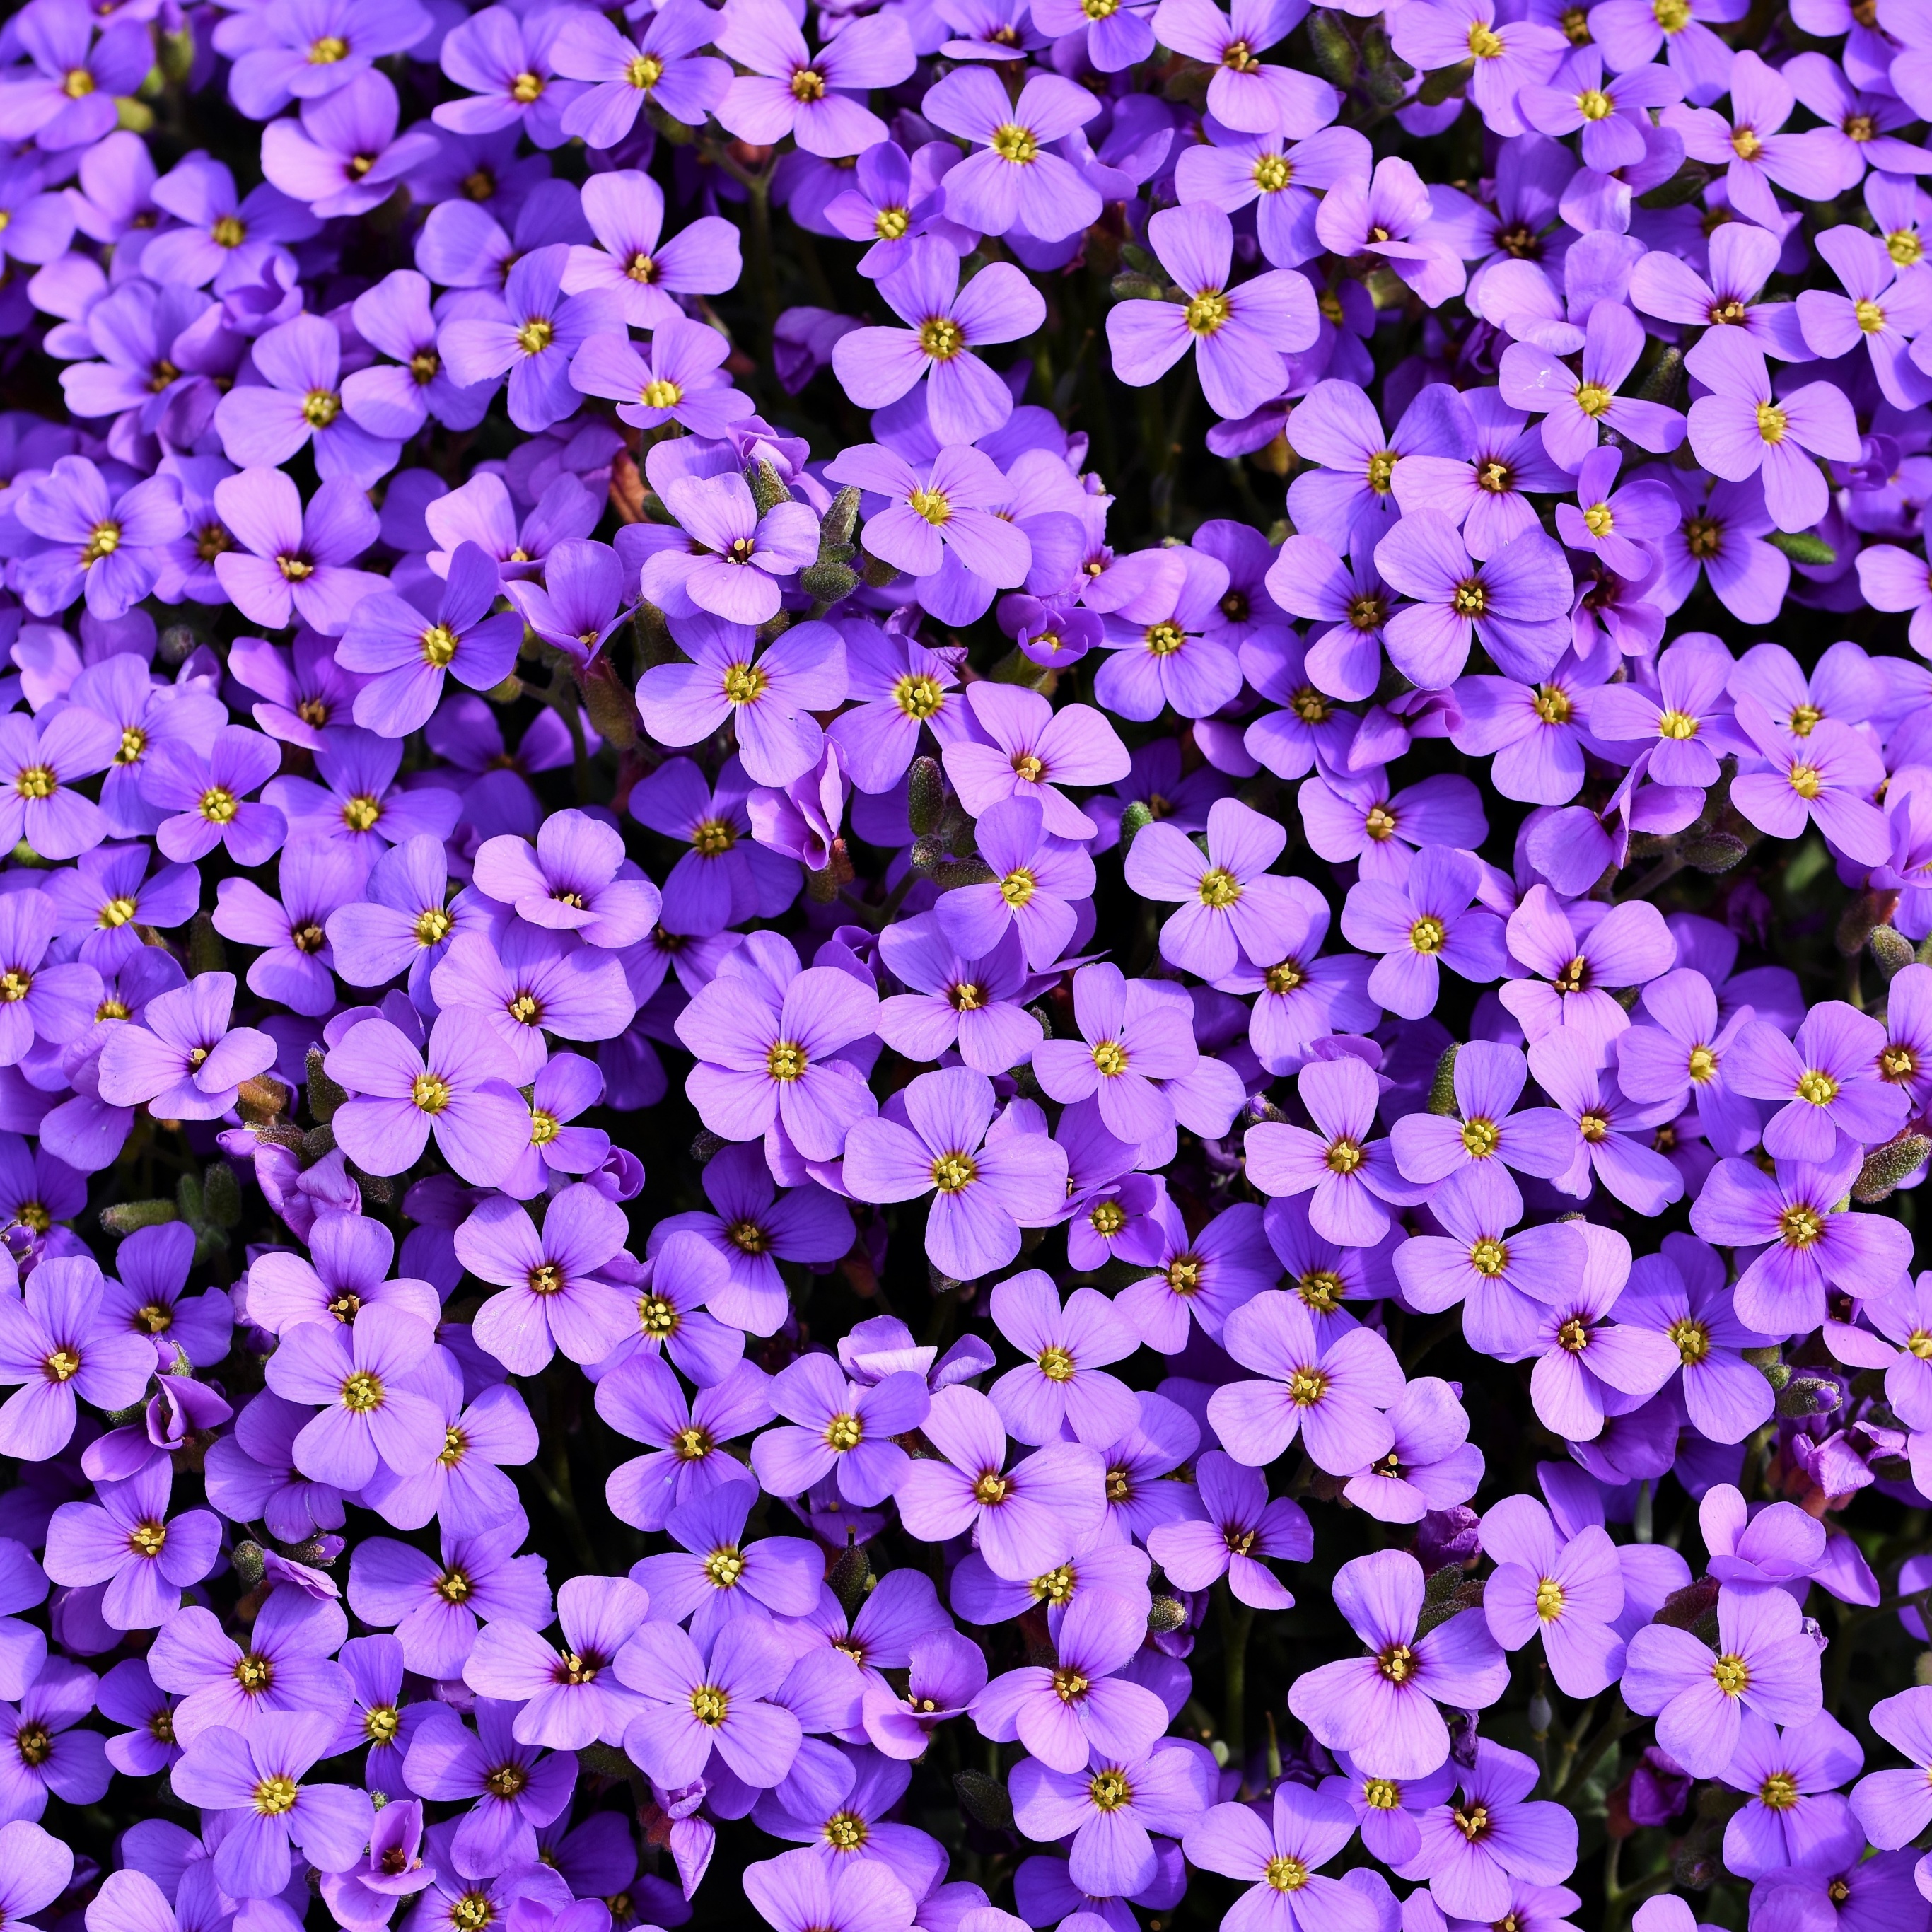 670445 Purple Flower Wallpaper Images Stock Photos  Vectors   Shutterstock